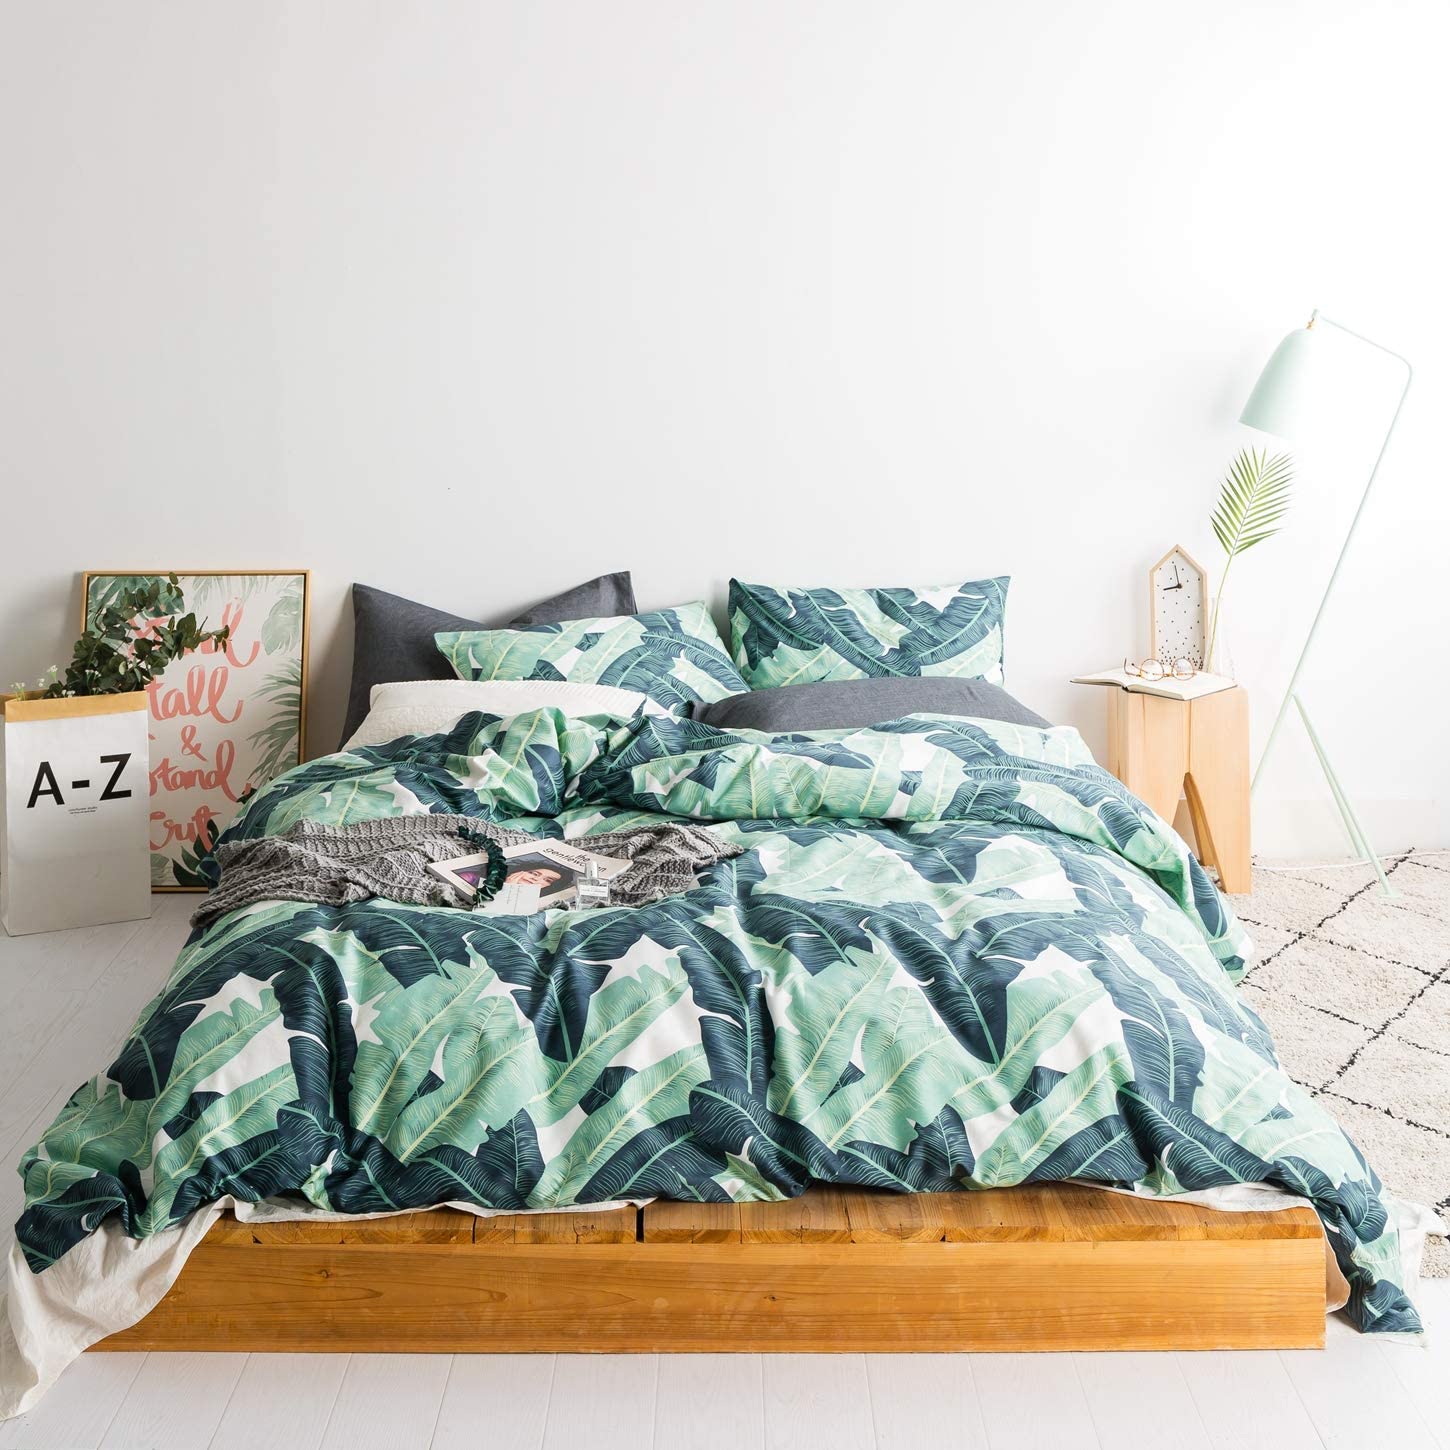 Botanical print bedding set 